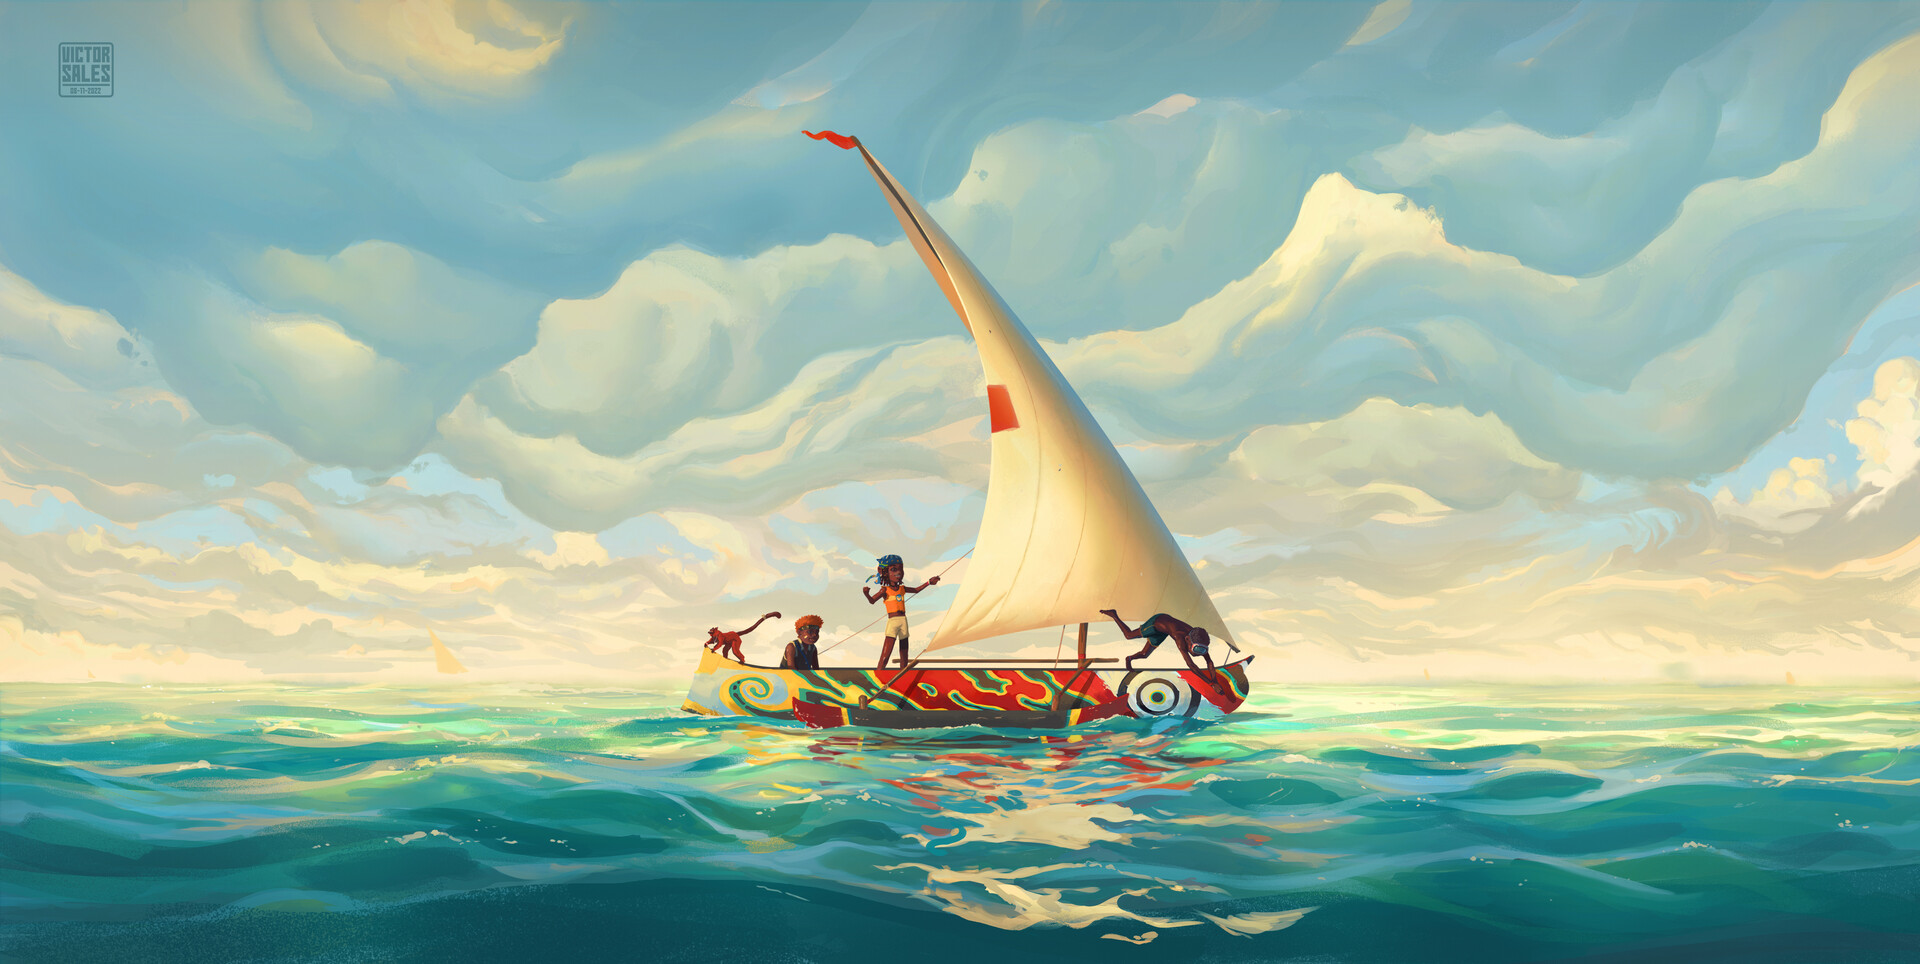 Victor Sales Digital Art Fantasy Art Water ArtStation Landscape Sailing Ship Diving Children Monkey  1920x964